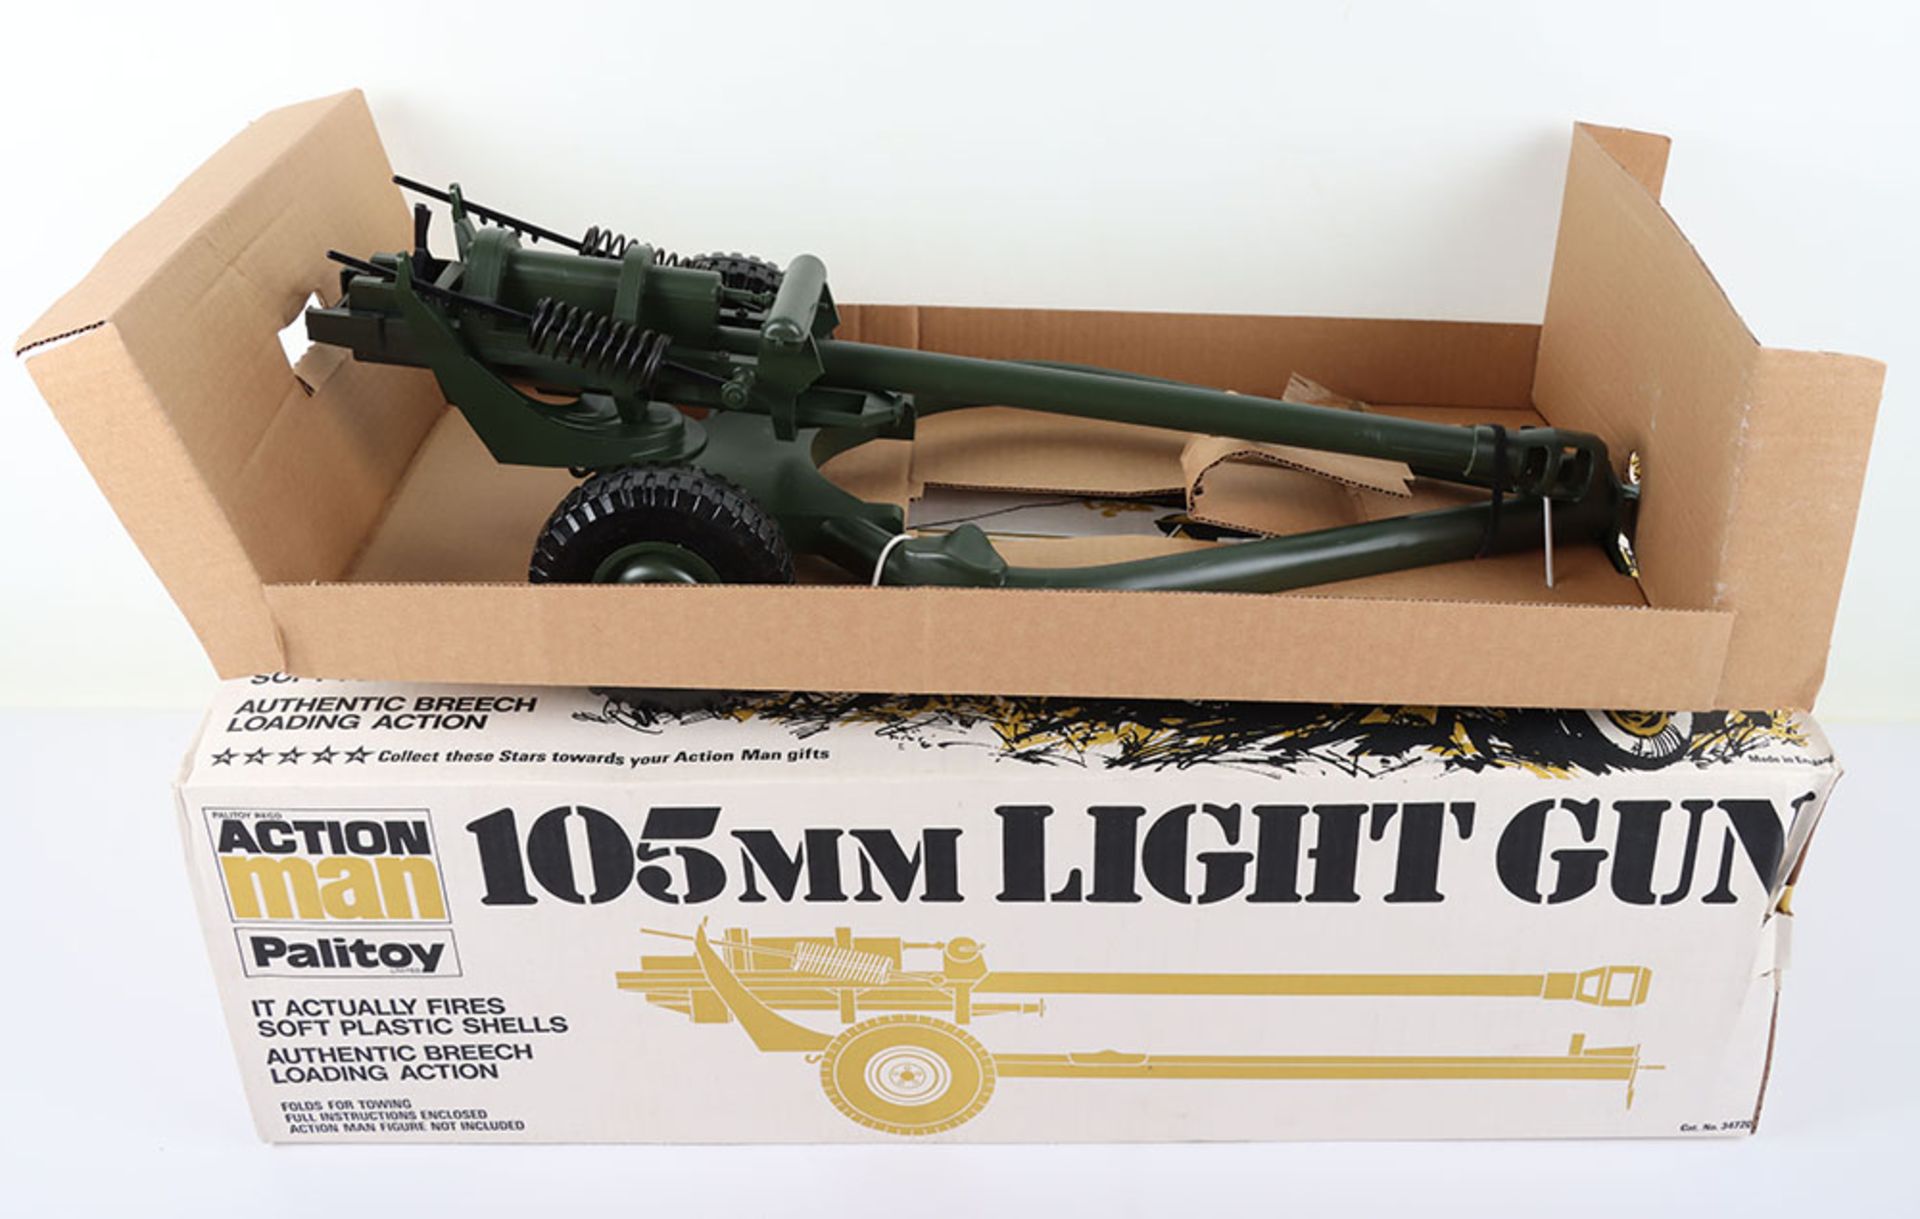 Palitoy Action Man 105mm Light Gun - Image 2 of 6